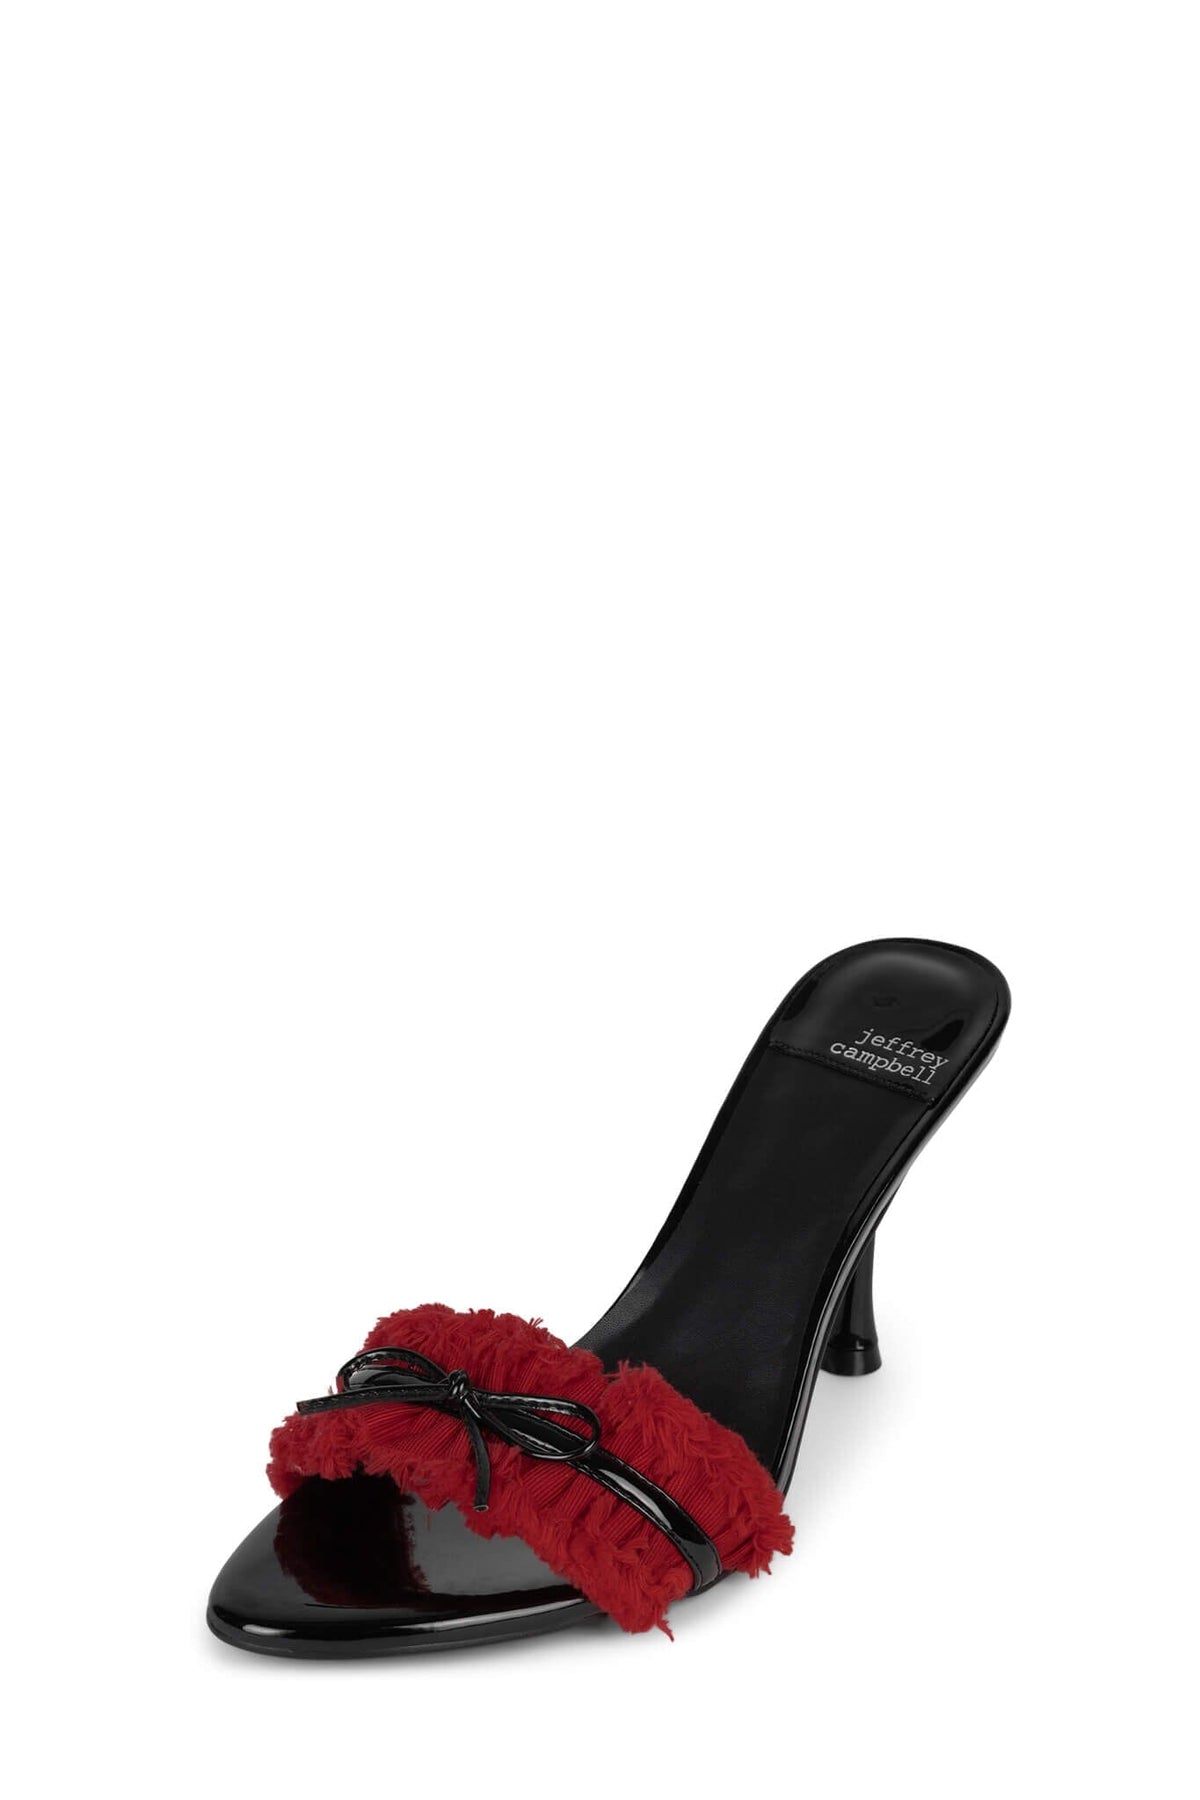 CINNAMON Jeffey Campbell Stiletto Sandal Black Patent Red